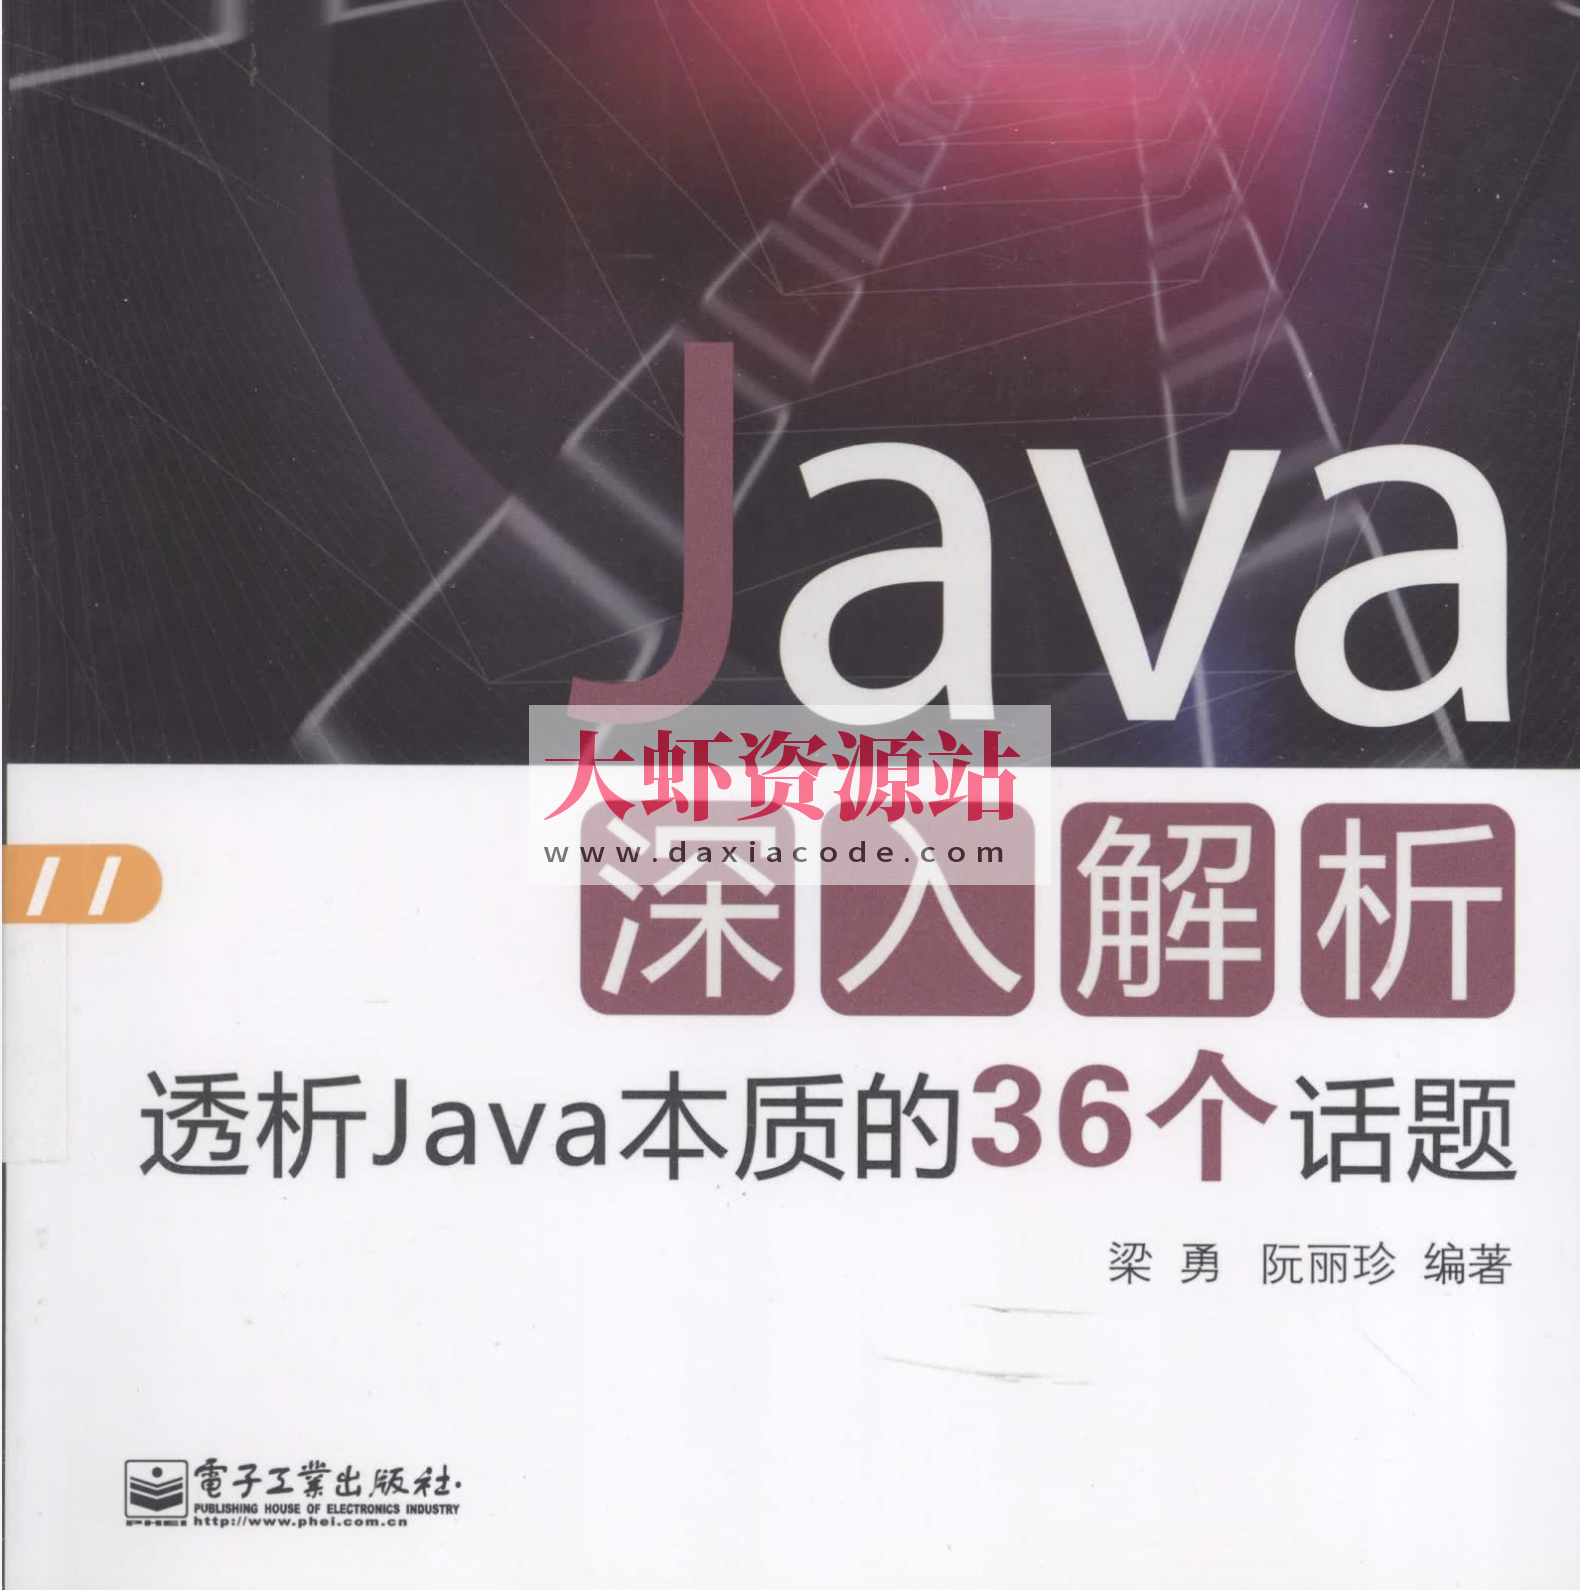 《Java深入解析:透析Java本质的36个话题》